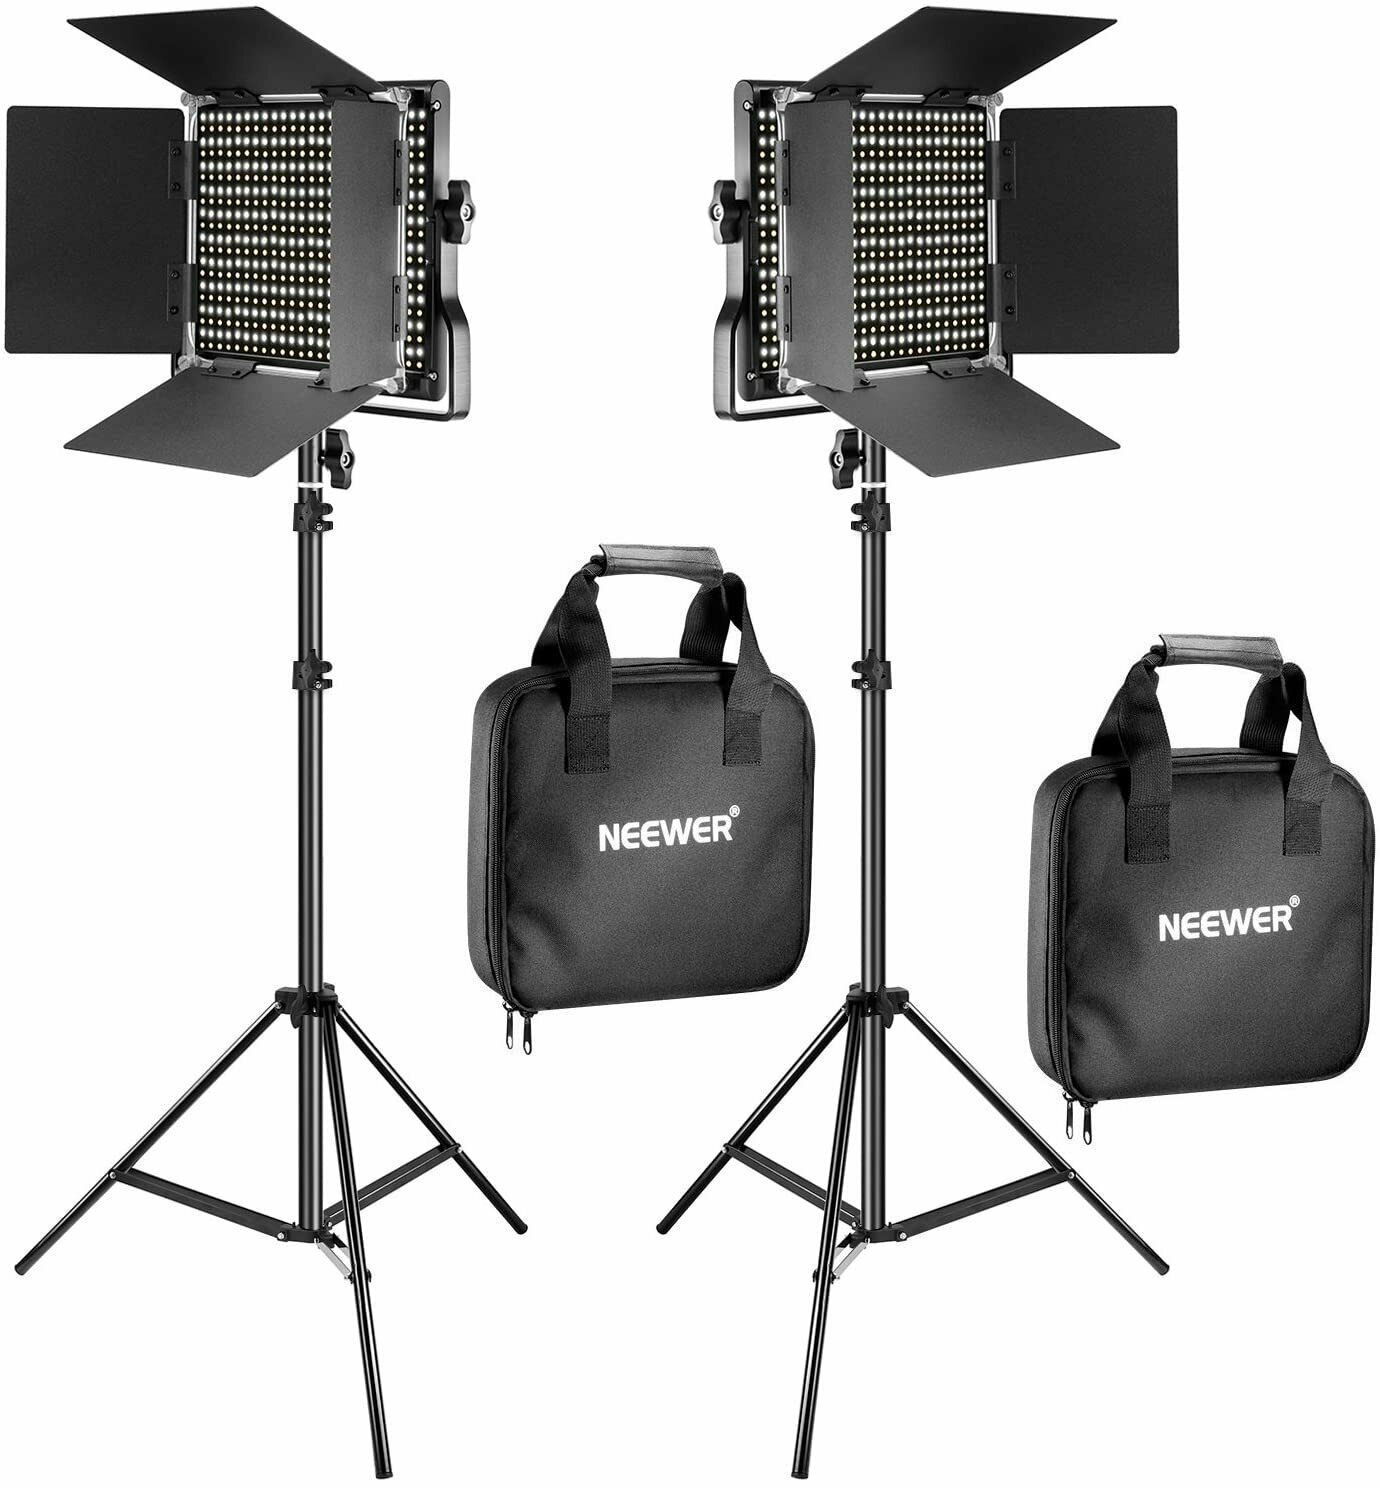 Neewer Bi-Color Video LED 2-Light Kit with Stands
#NE90095562 MFR #90095562